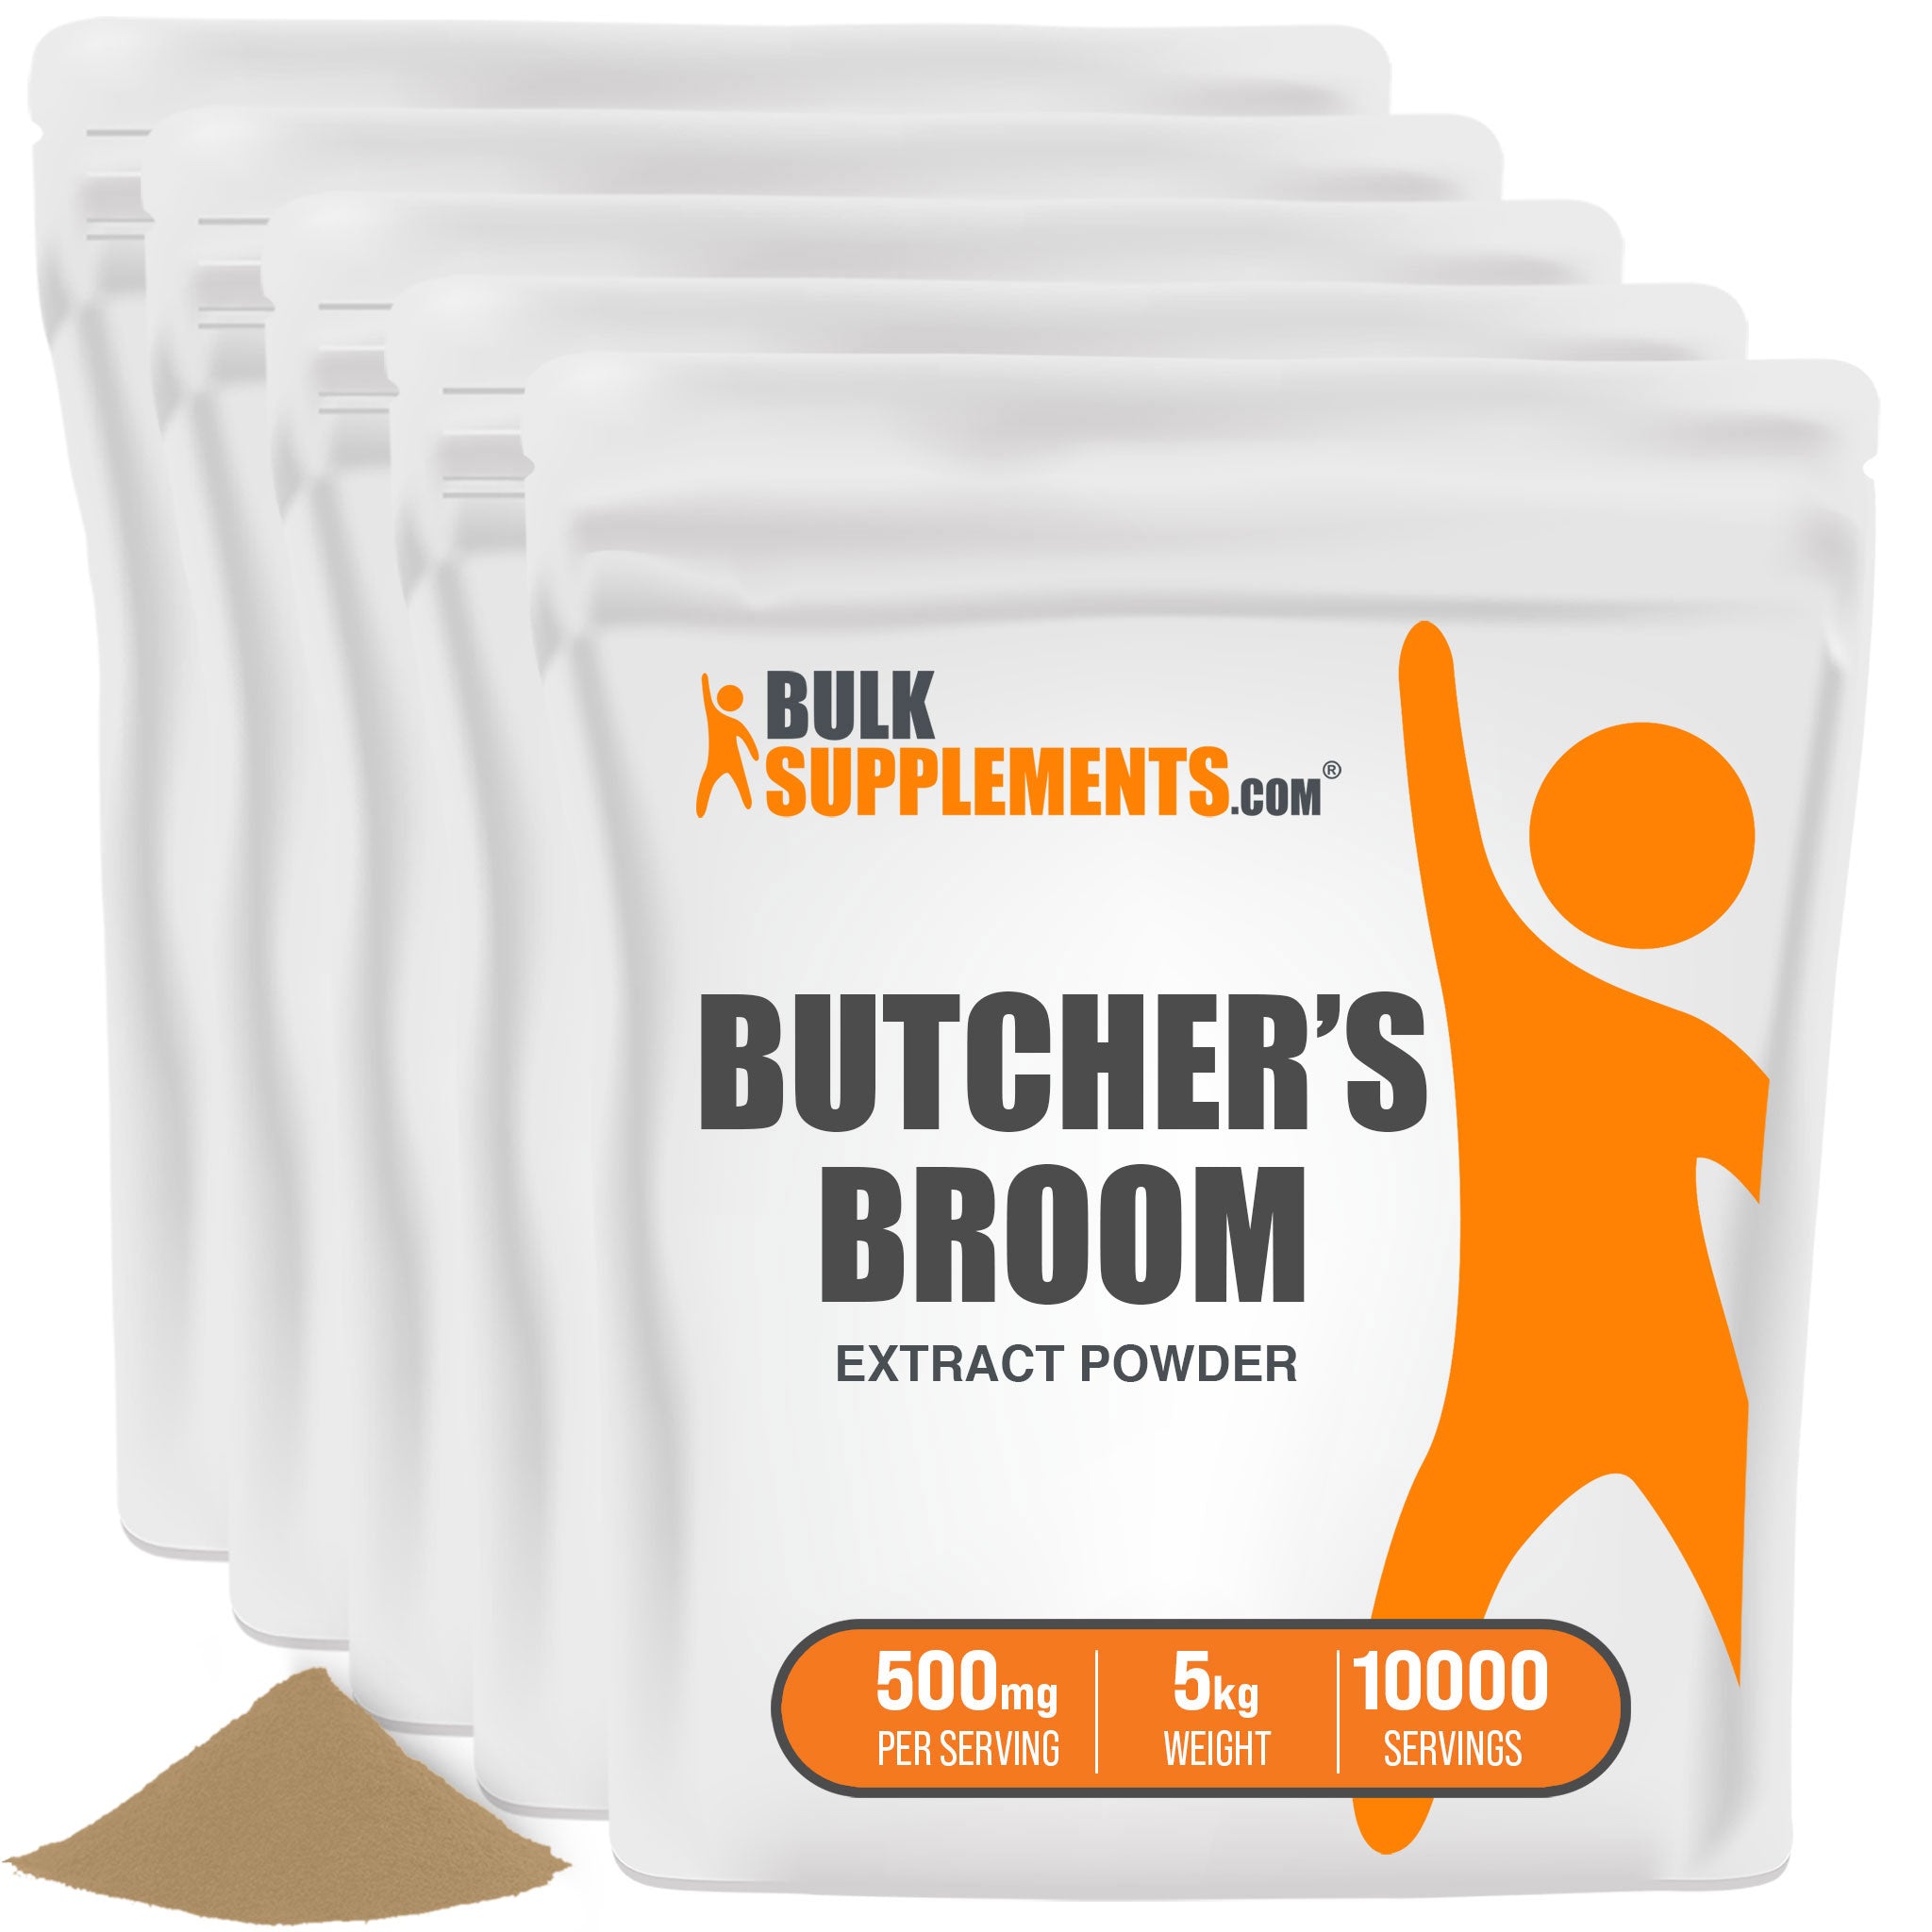 BulkSupplements Butcher's Broom Extract Powder 5 Kilograms set of 5 bags